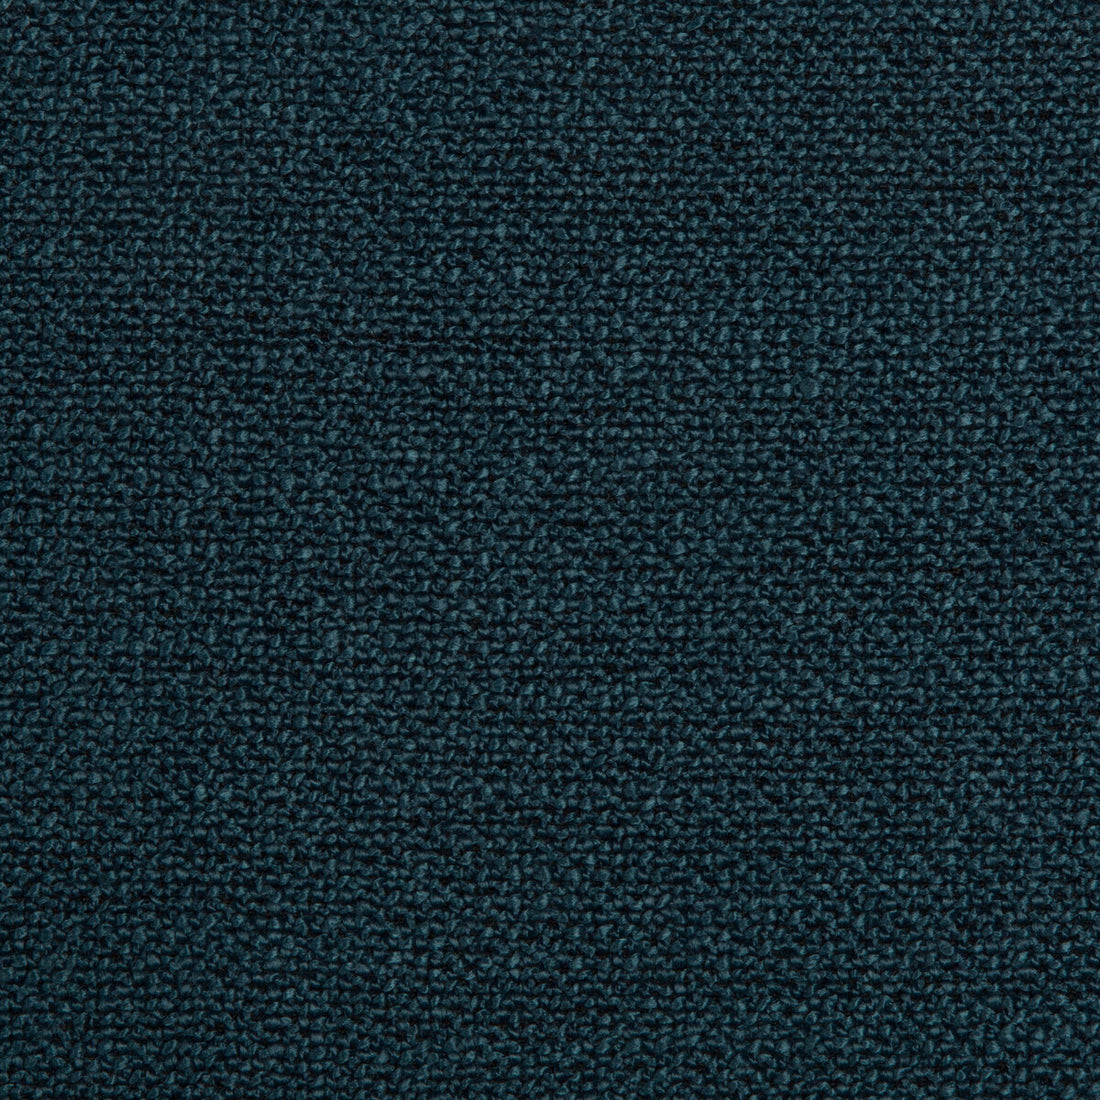 Kravet Smart fabric in 35379-550 color - pattern 35379.550.0 - by Kravet Smart in the Performance Kravetarmor collection